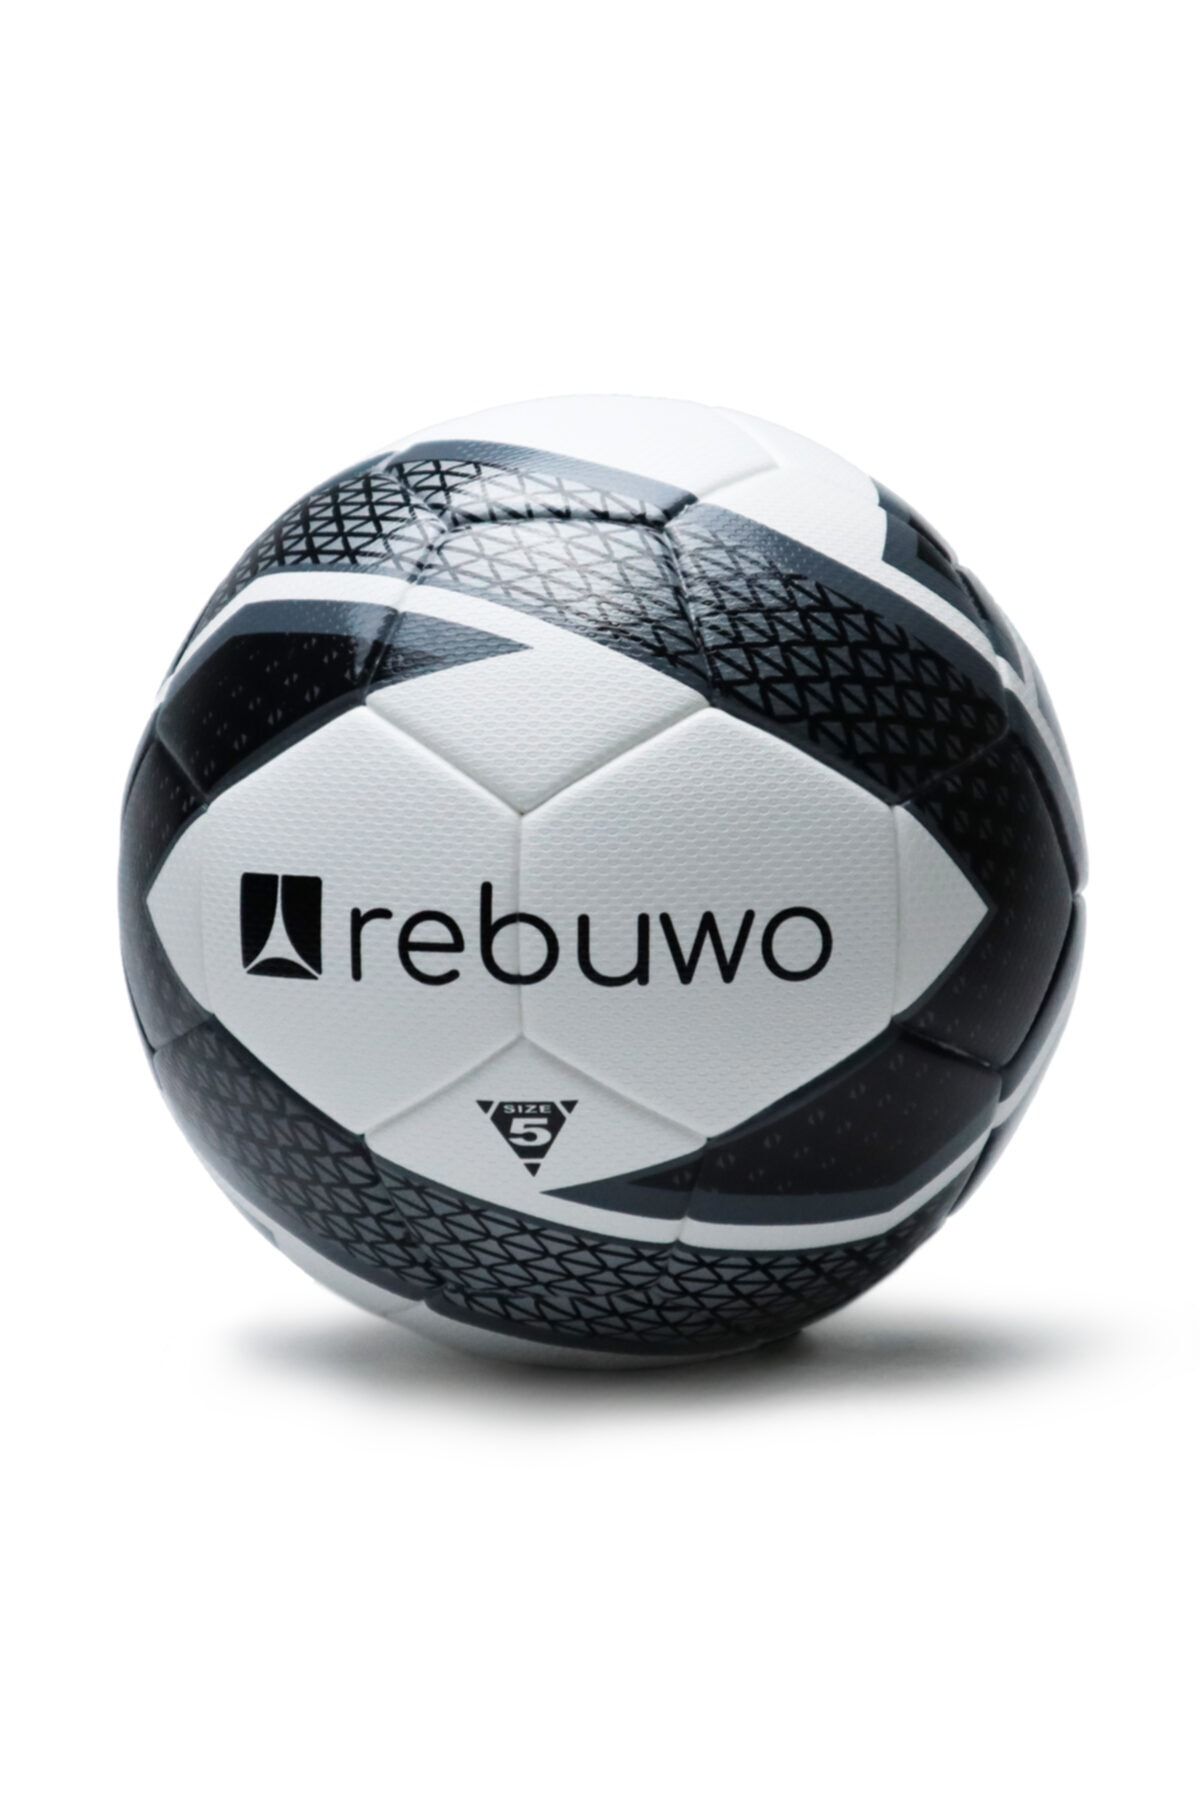 Rebuwo Futbol Topu Siyah Beyaz 5 Numara Dikişsiz Pu Maç Topu